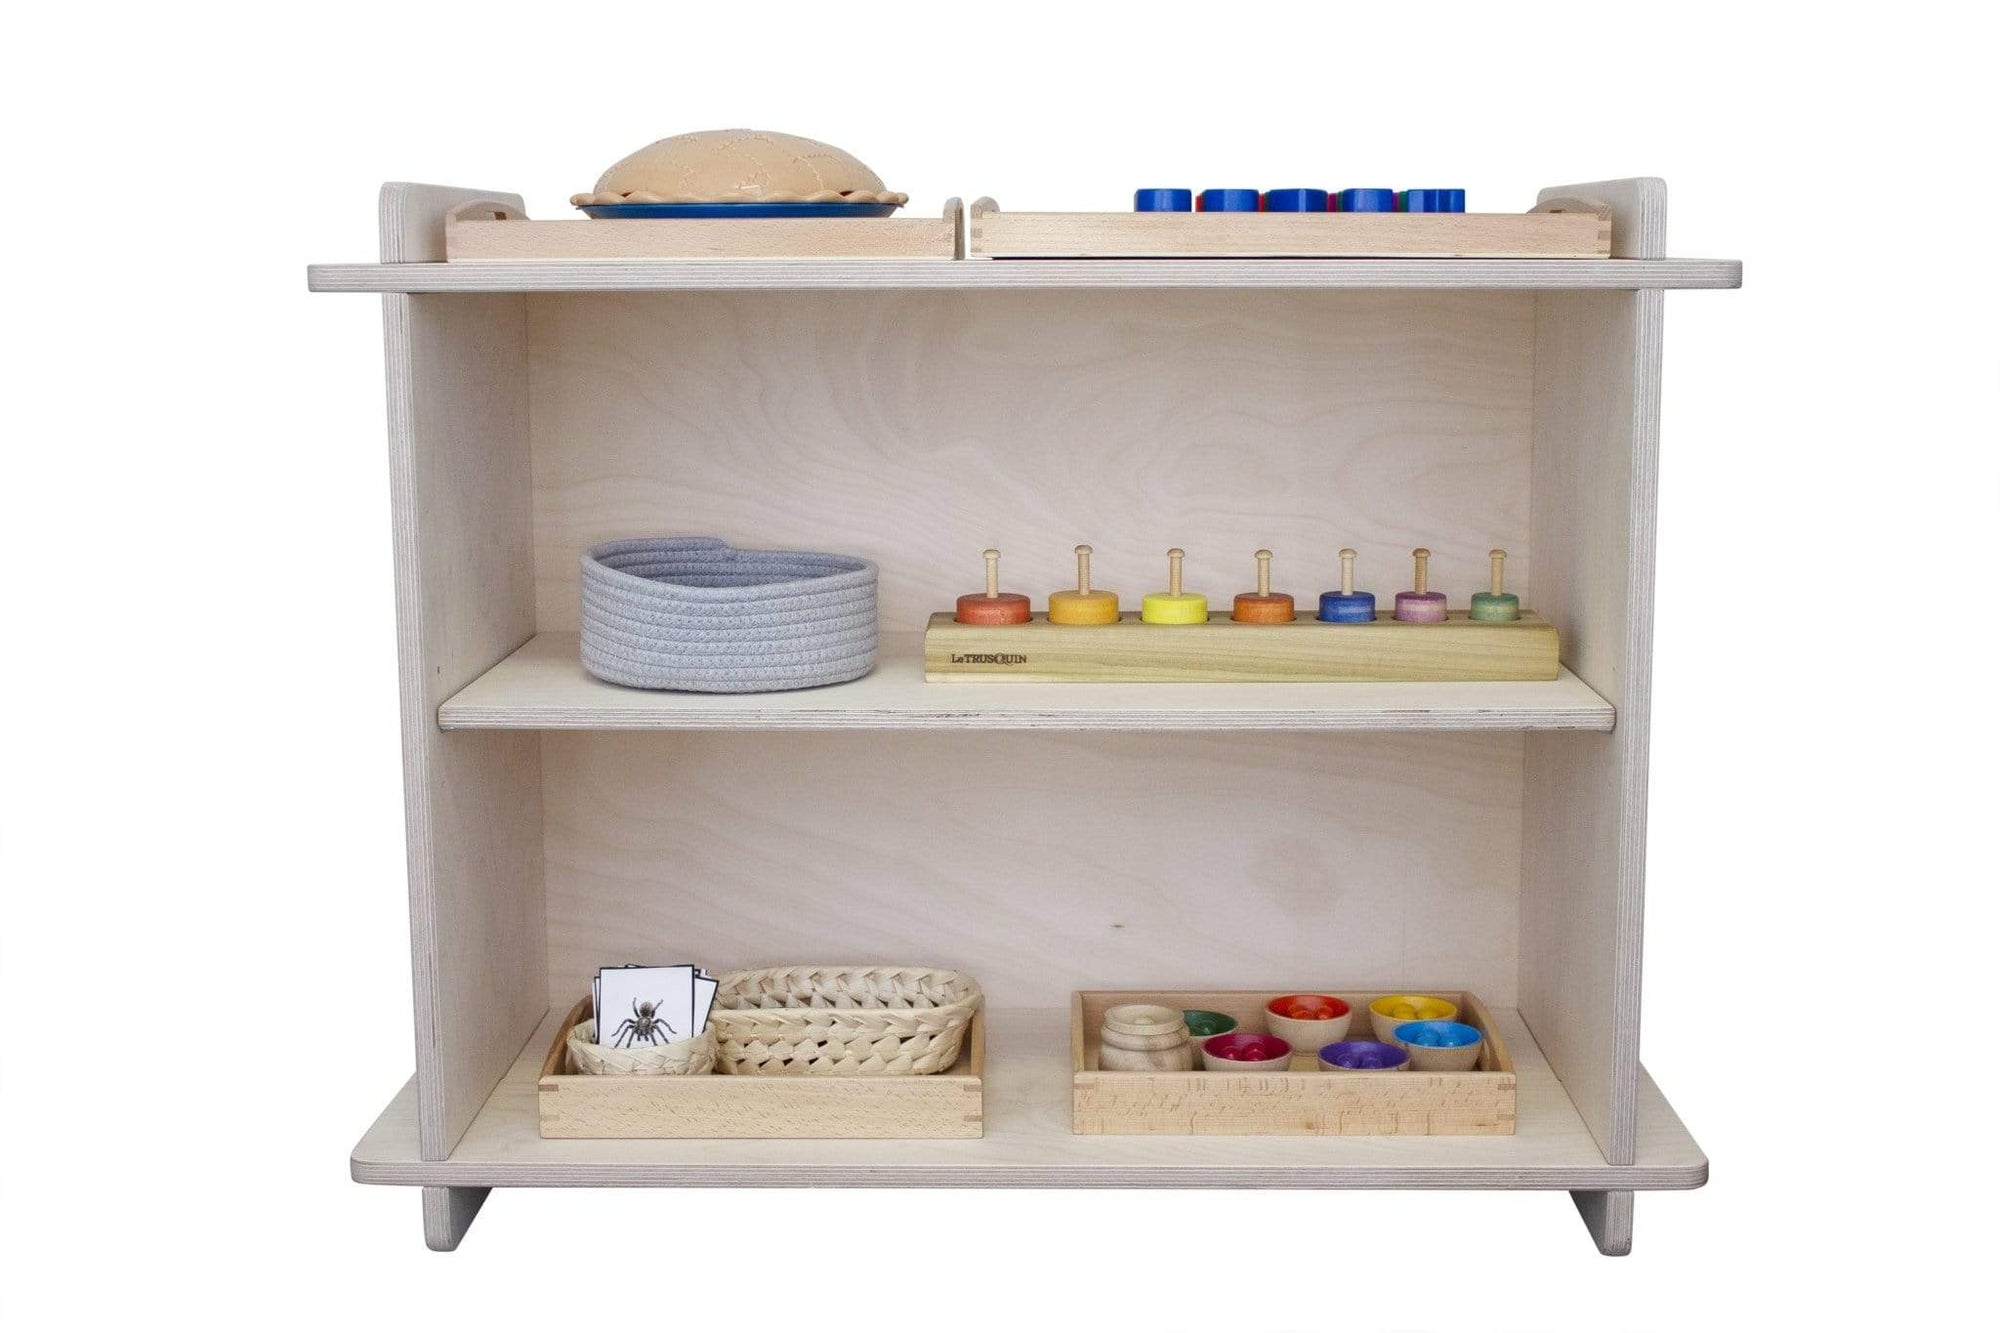 Montessori Shelves - The Montessori Room